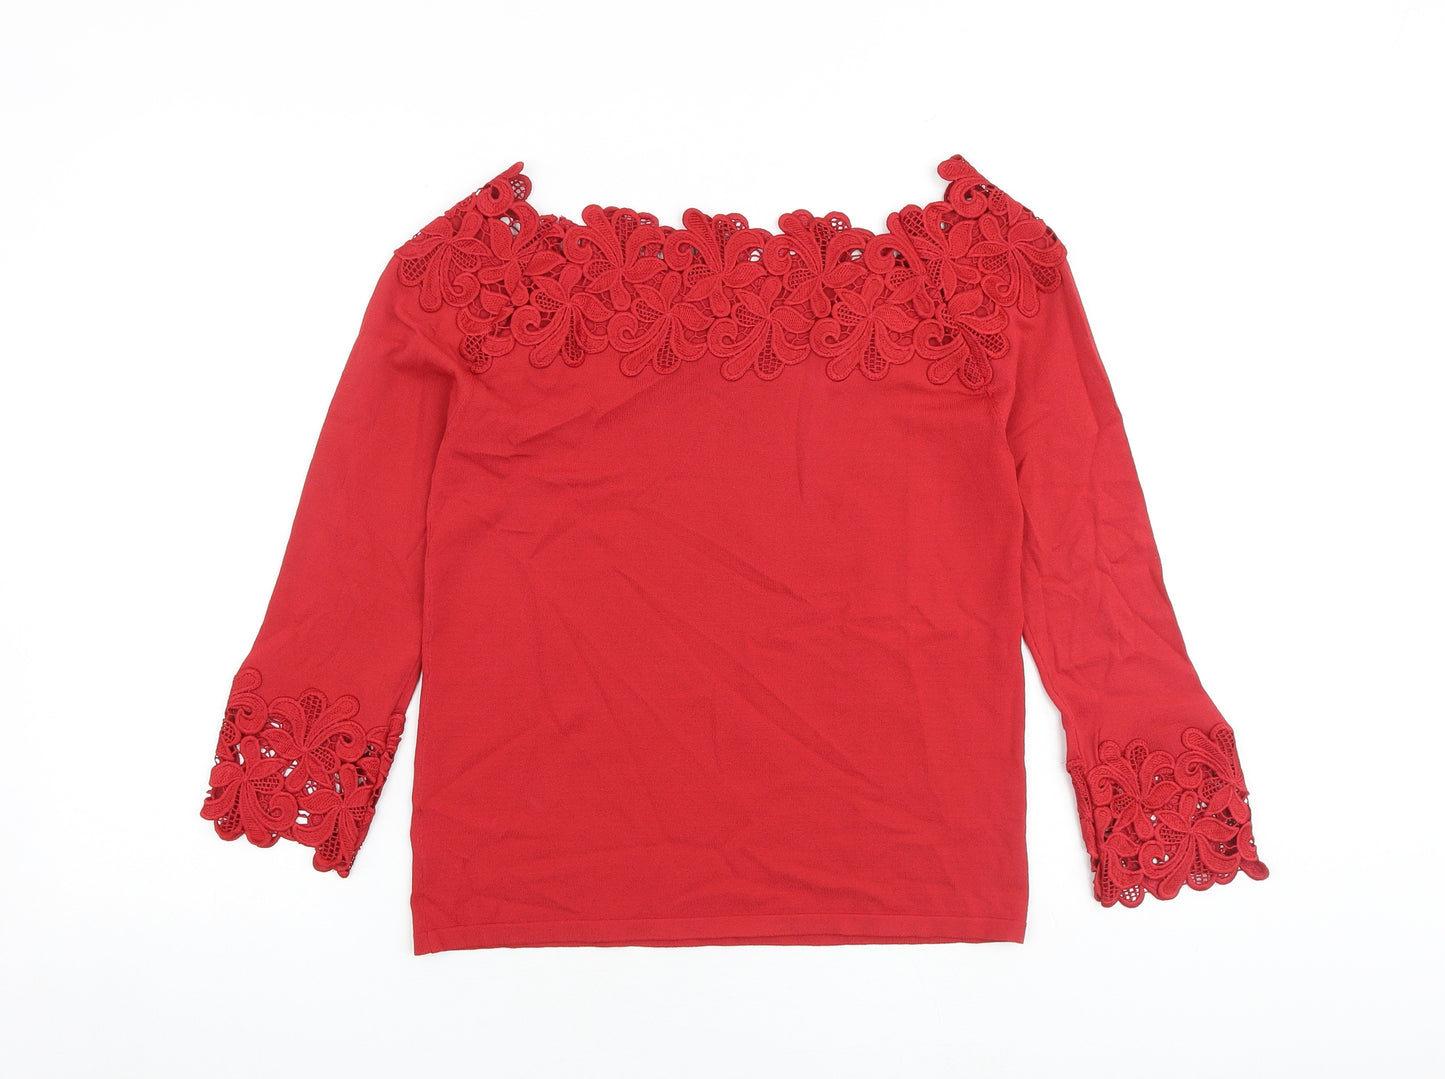 NEXT Womens Red Nylon Basic Blouse Size 12 Off the Shoulder - Crochet Neckline